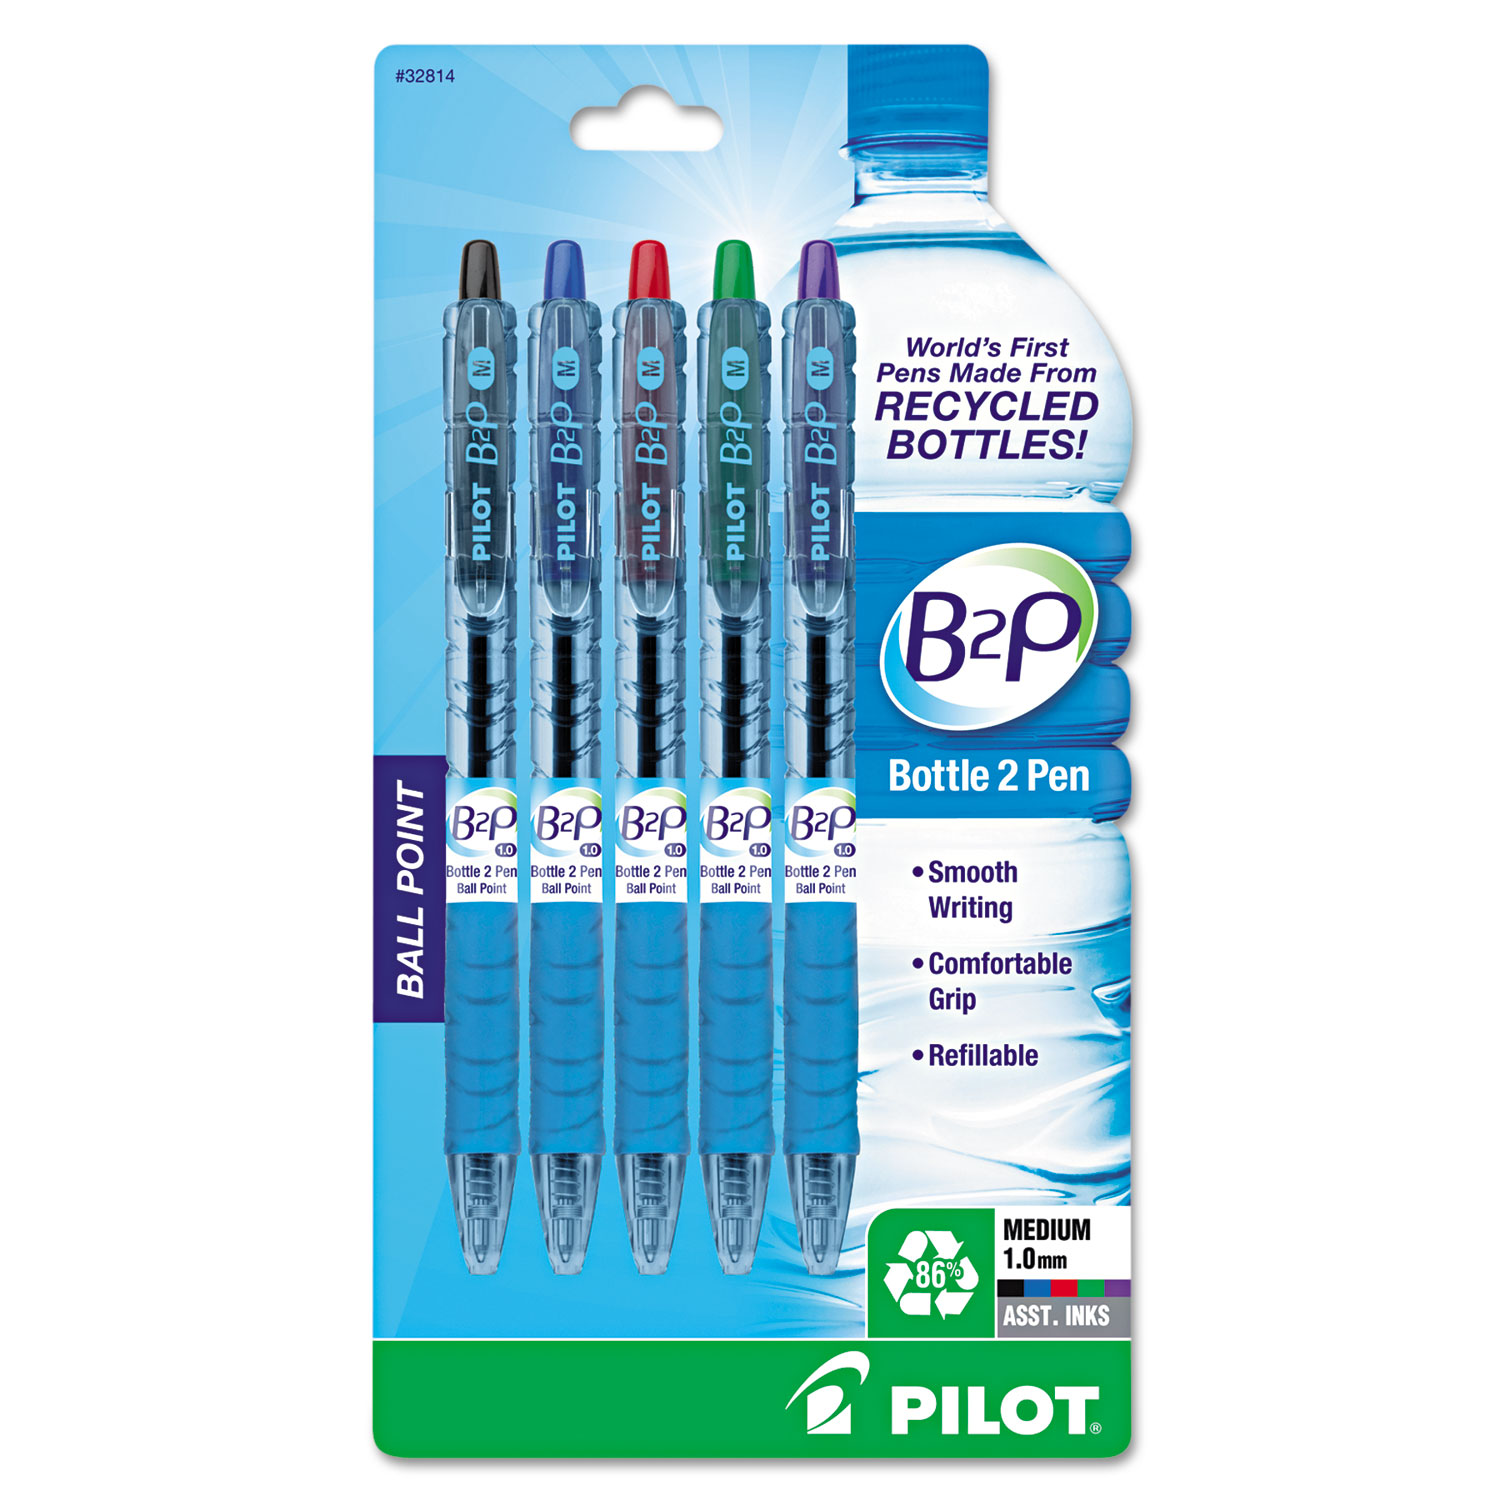  Pilot 32814 B2P Bottle-2-Pen Recycled Retractable Ballpoint Pen, 1mm, Assorted Ink, 5/Pack (PIL32814) 